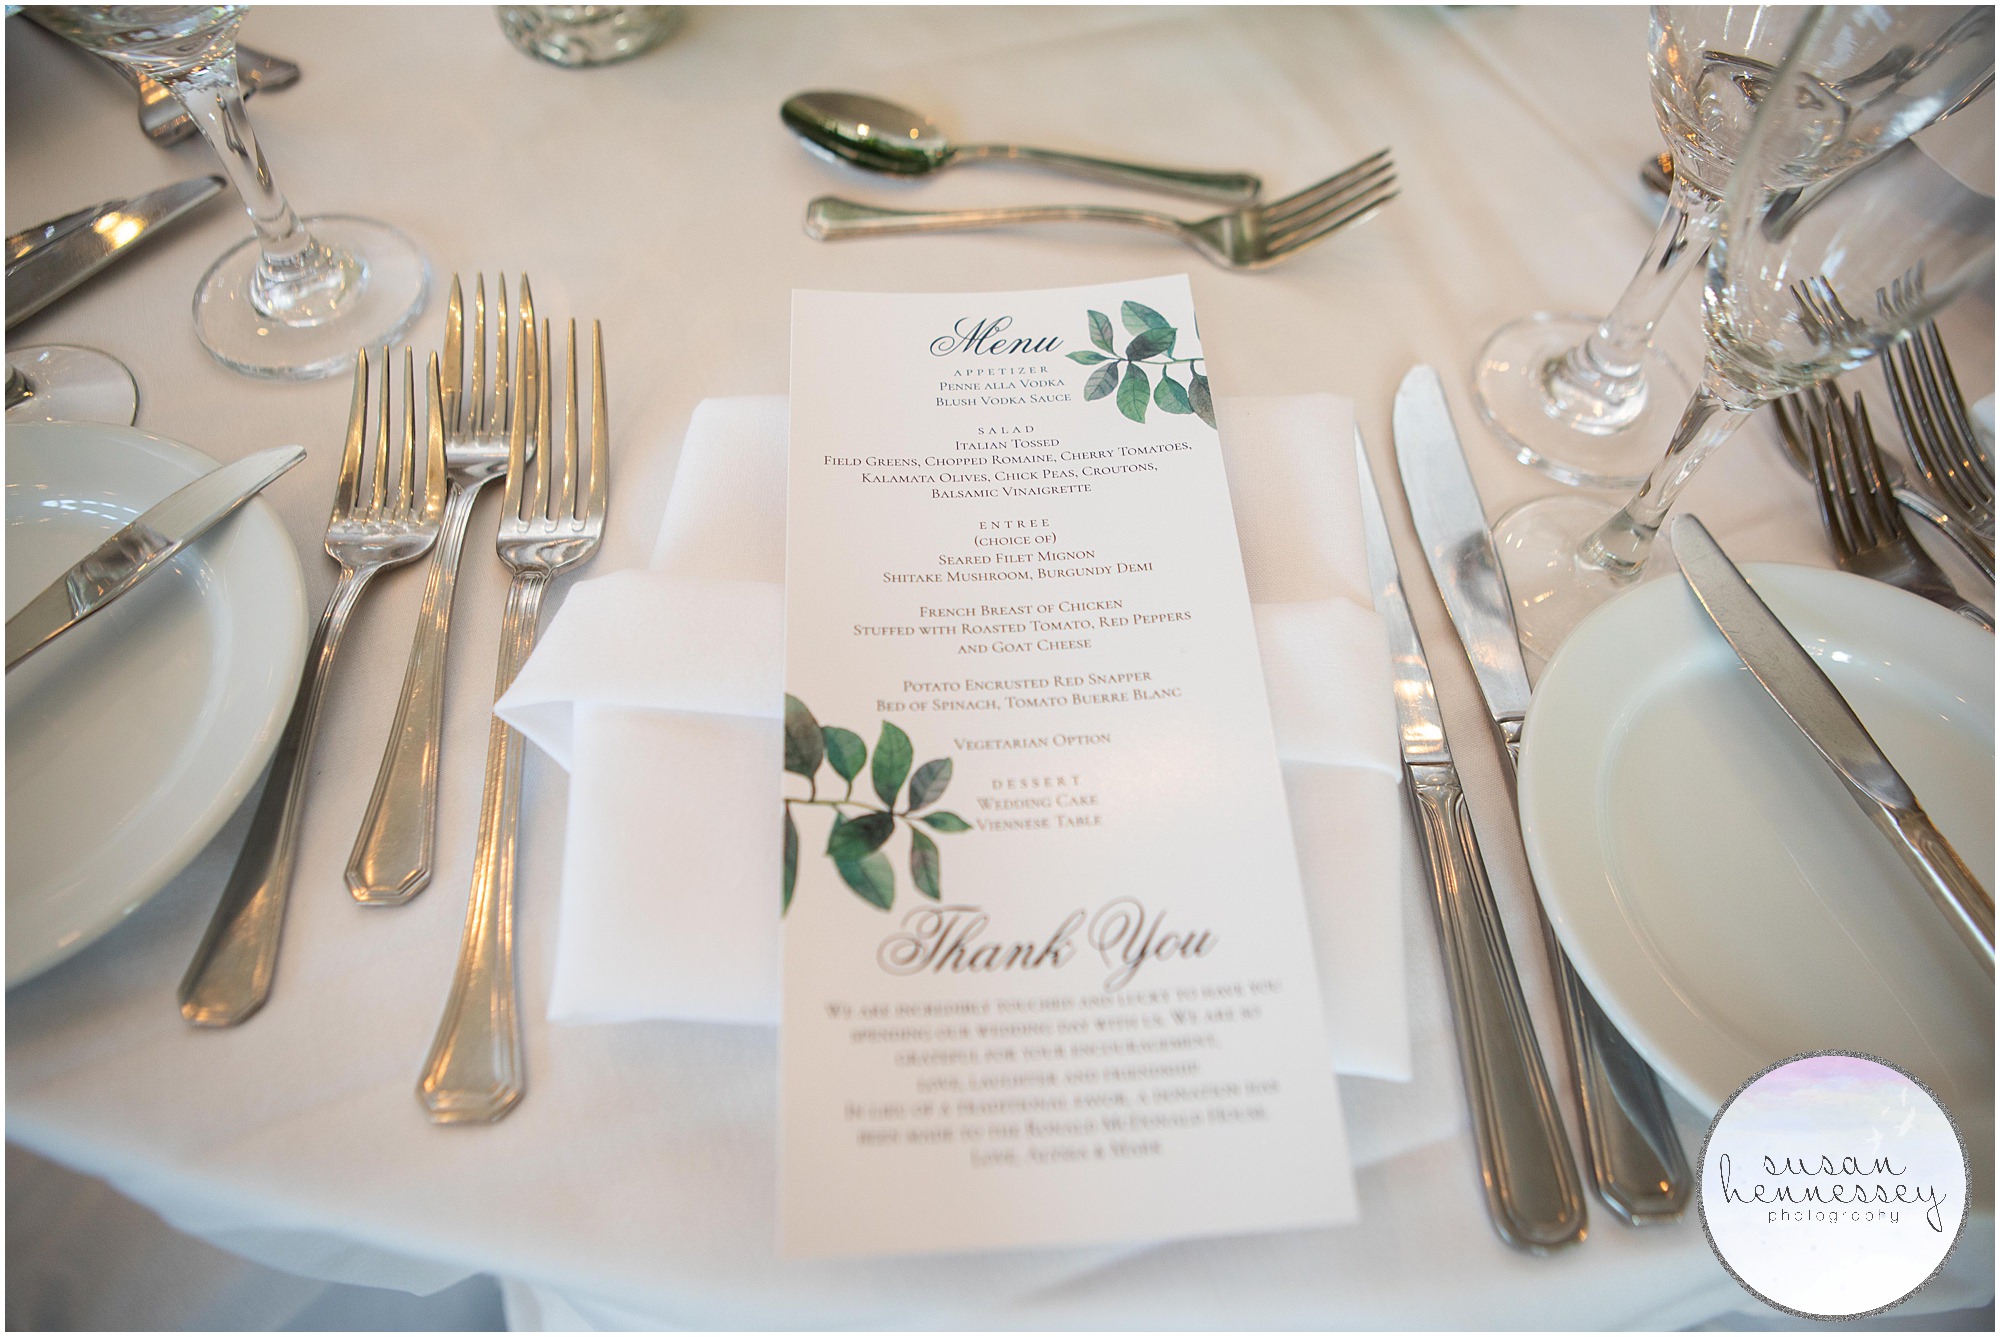 Wedding menu at reception